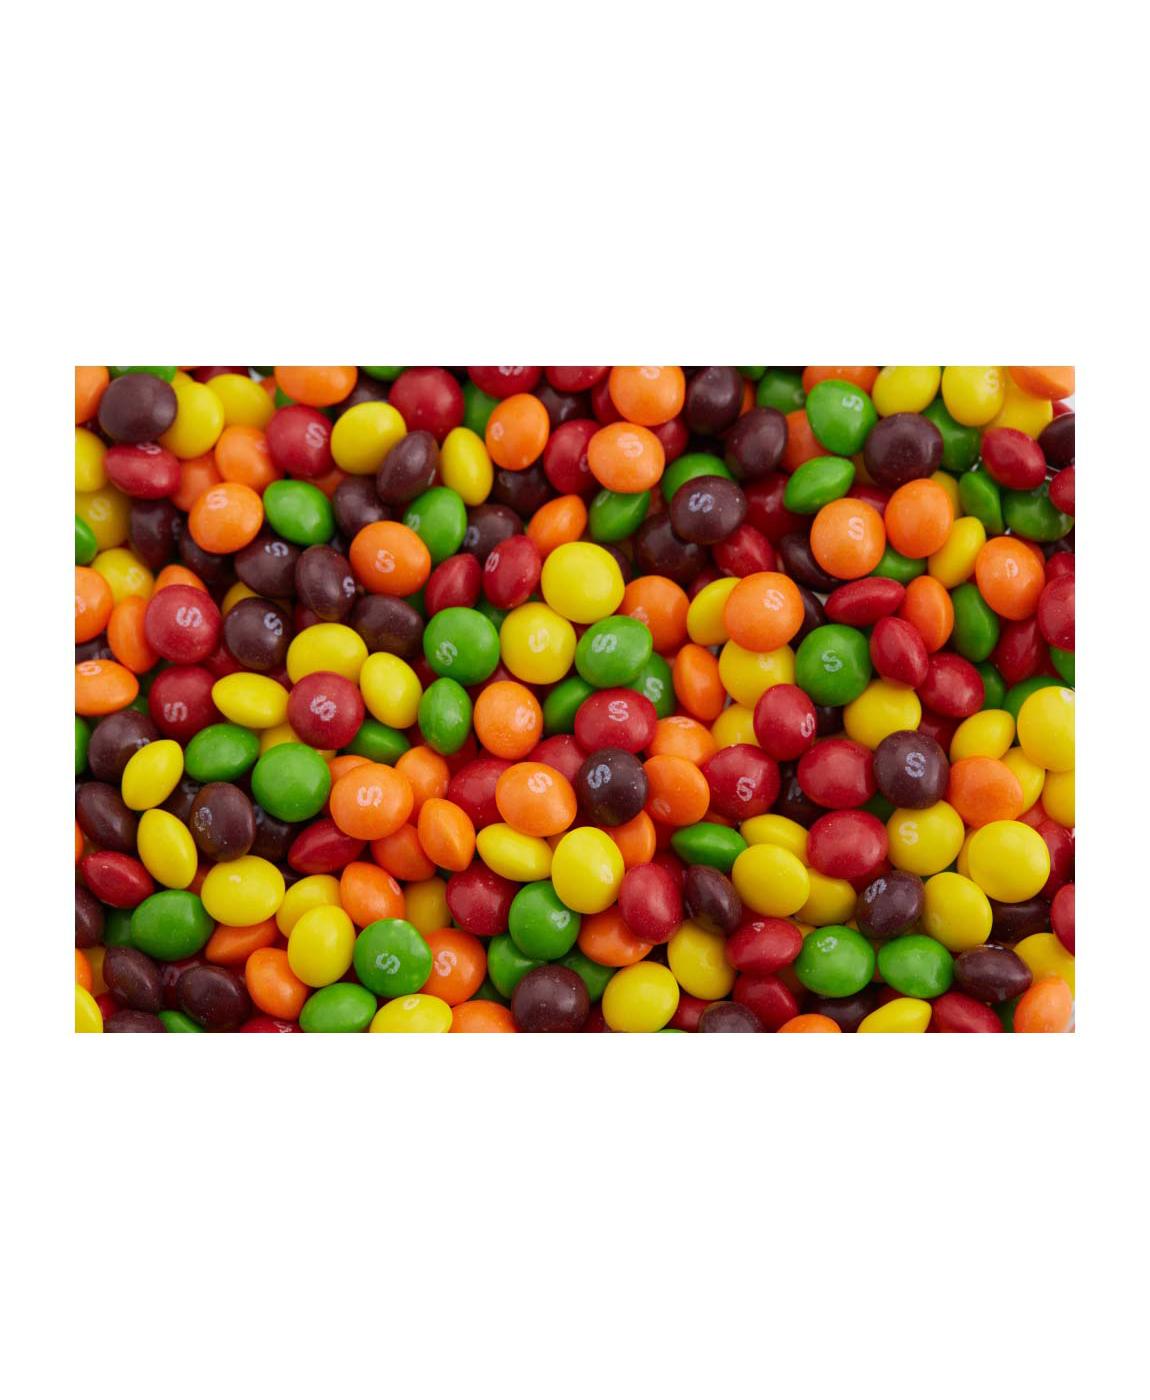 Skittles Original Candy Bag; image 9 of 11